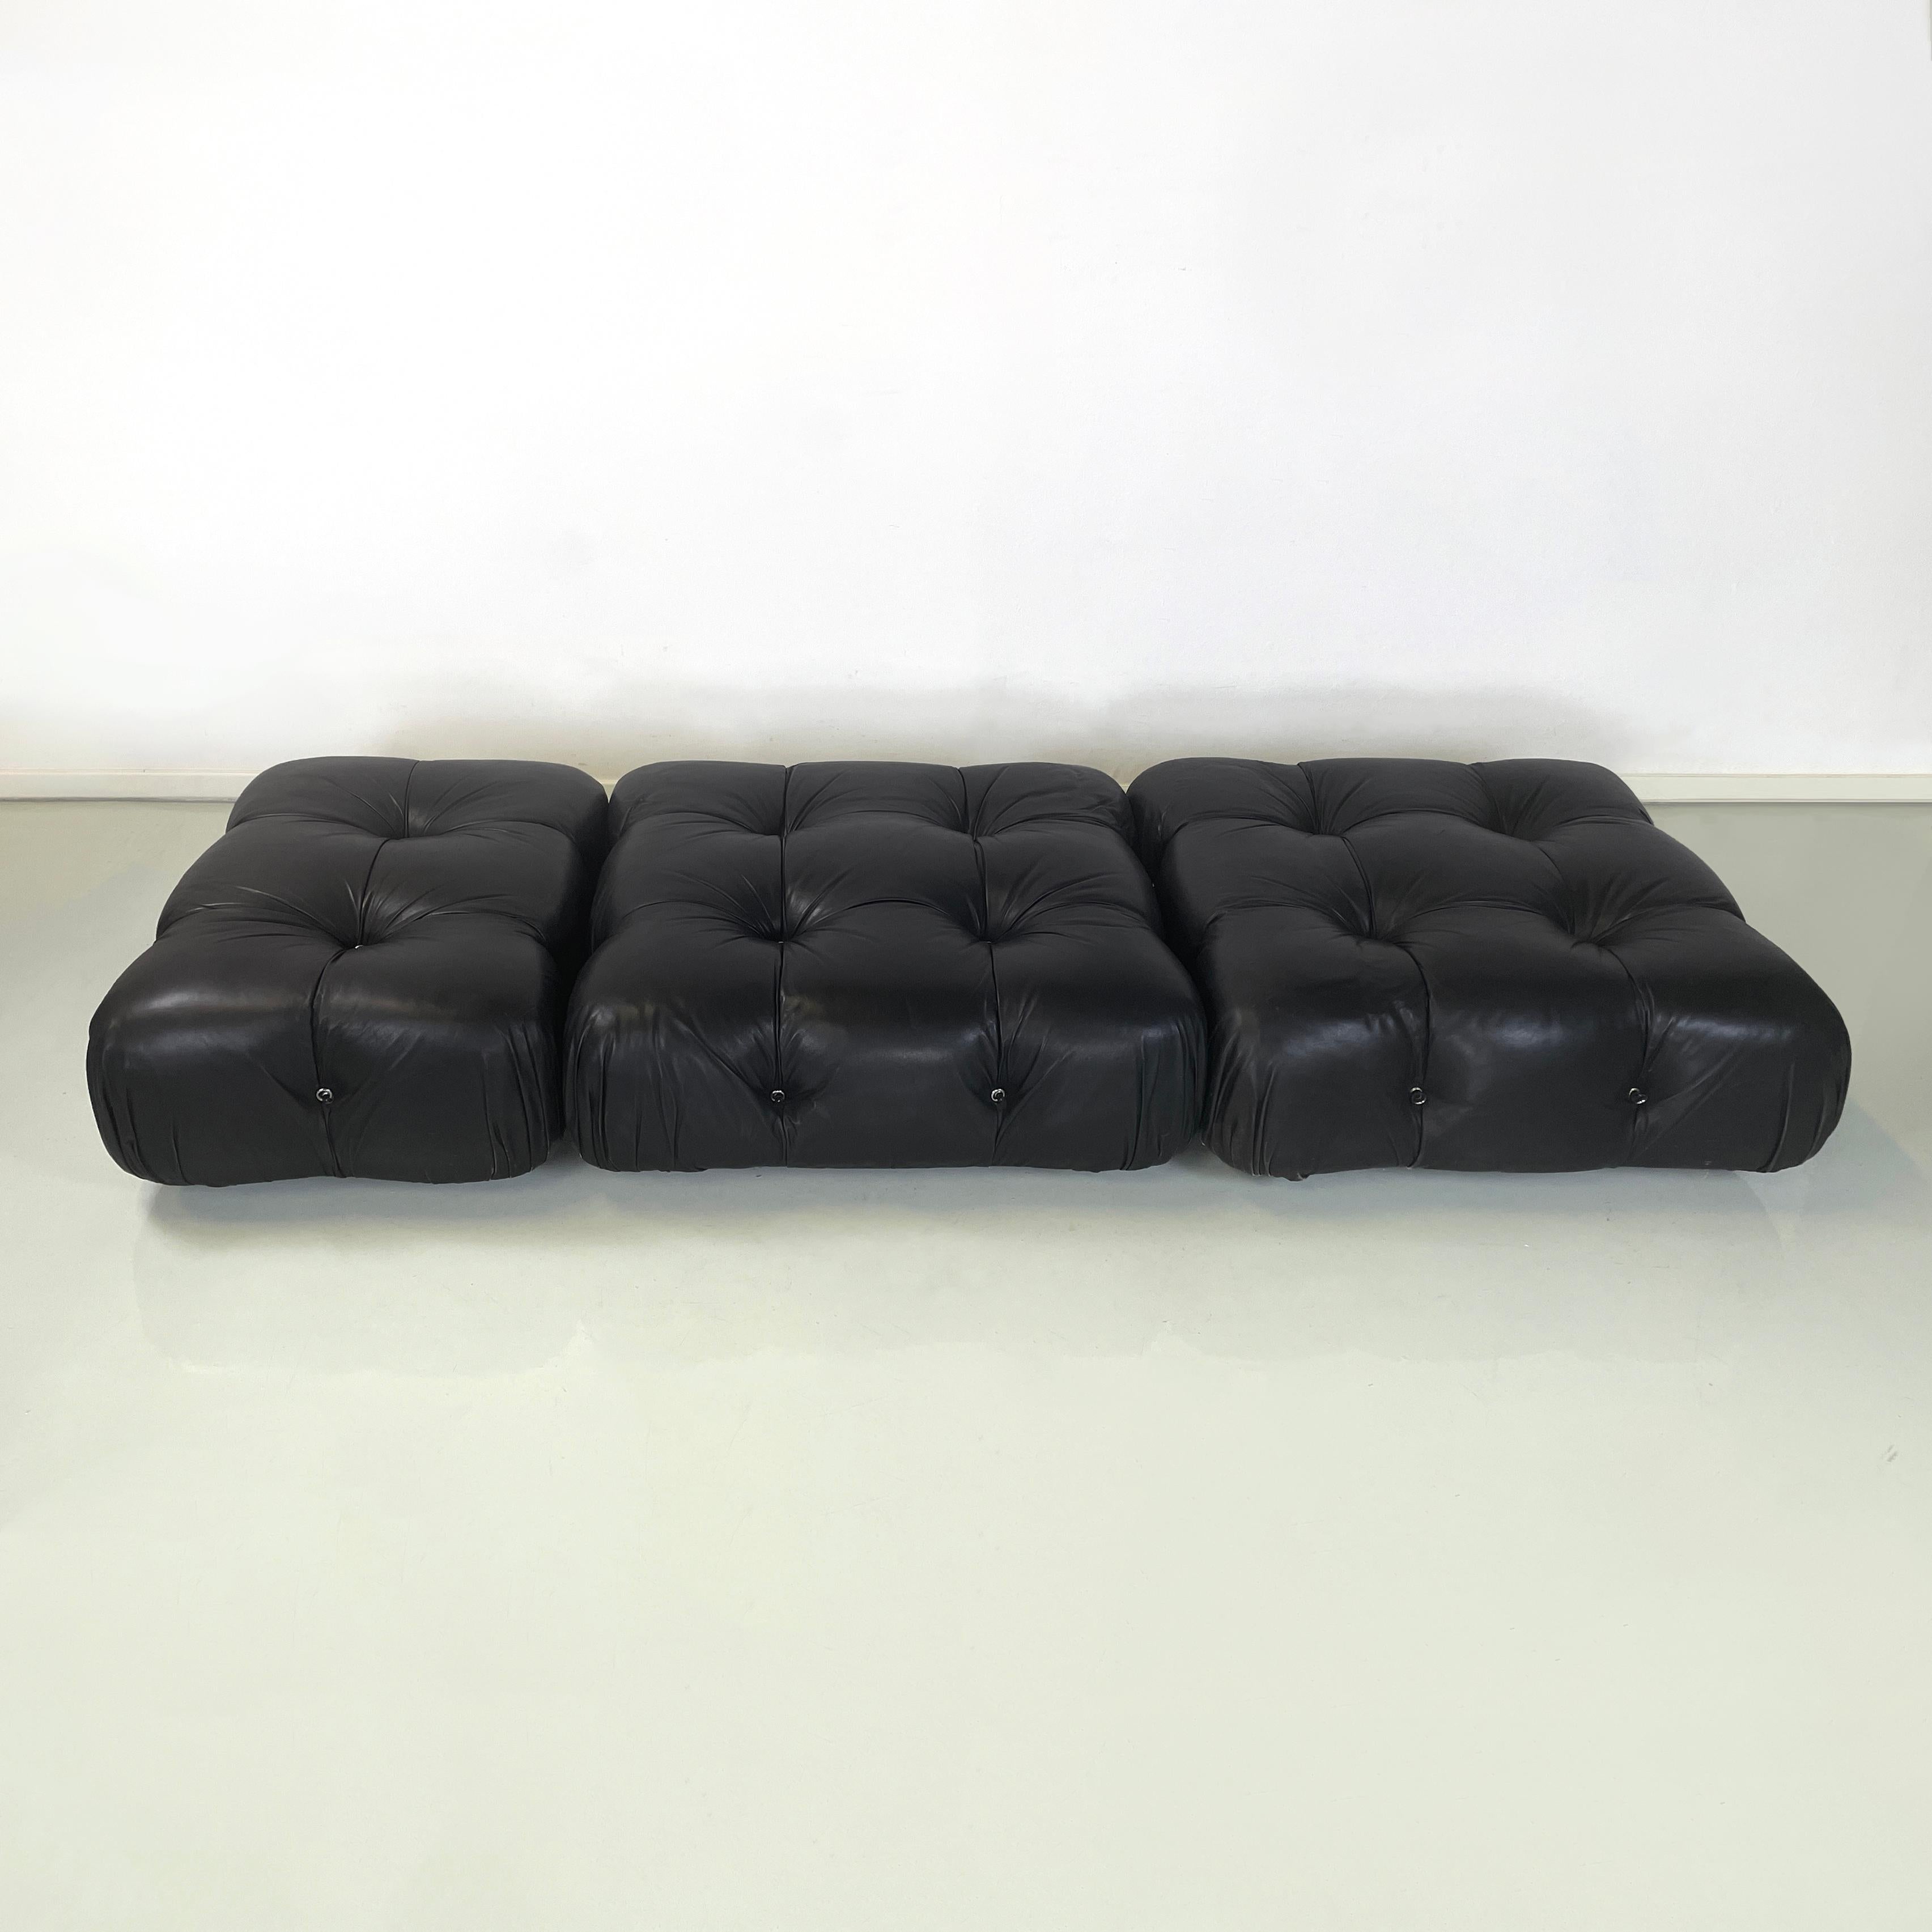 Metal Italian modern Black leather modular sofa Camaleonda by Bellini for B&B, 1970s